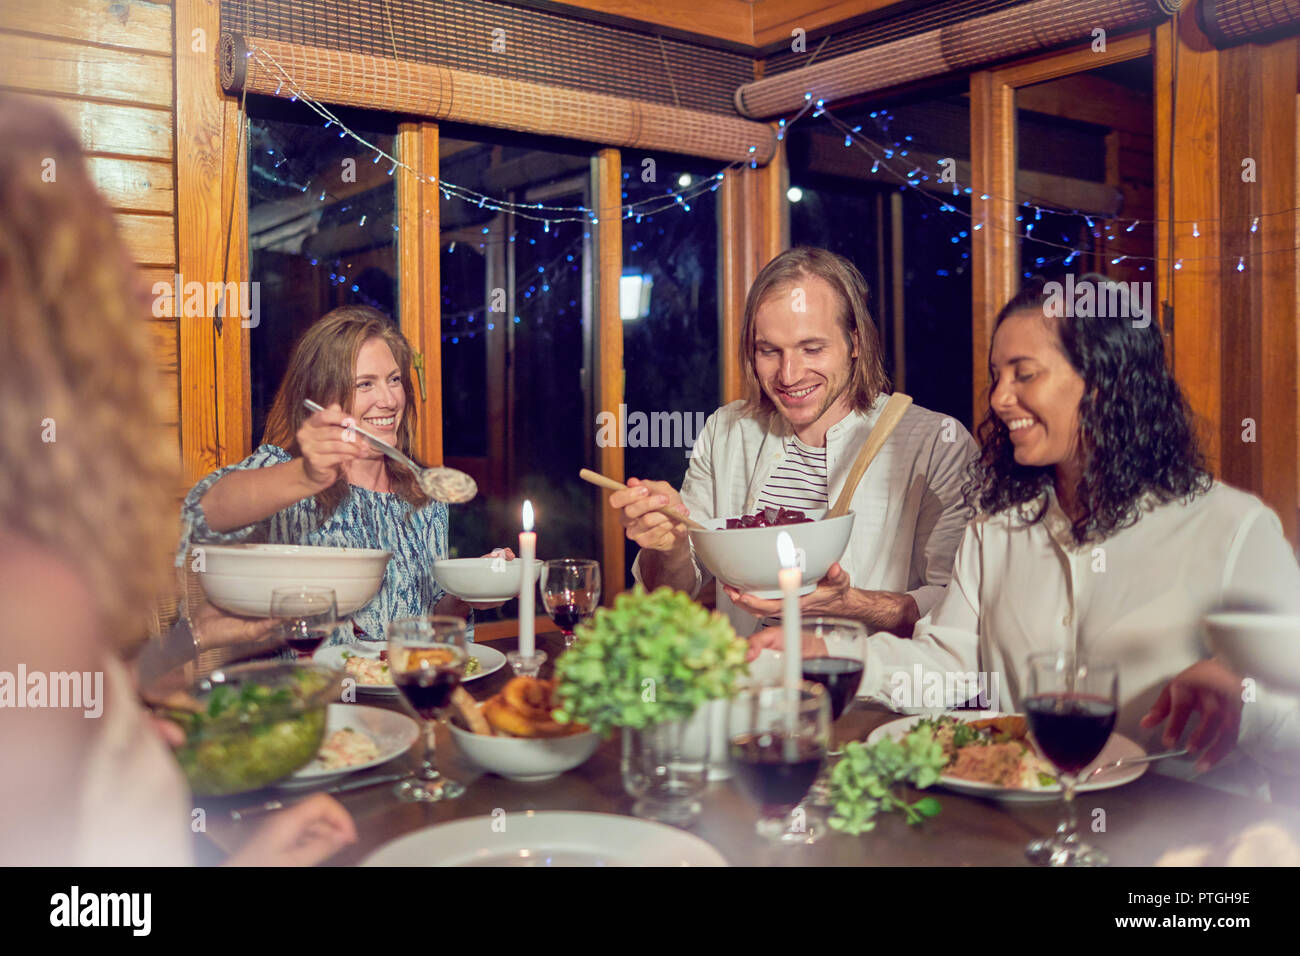 Friends enjoying dinner in cabin Stock Photo